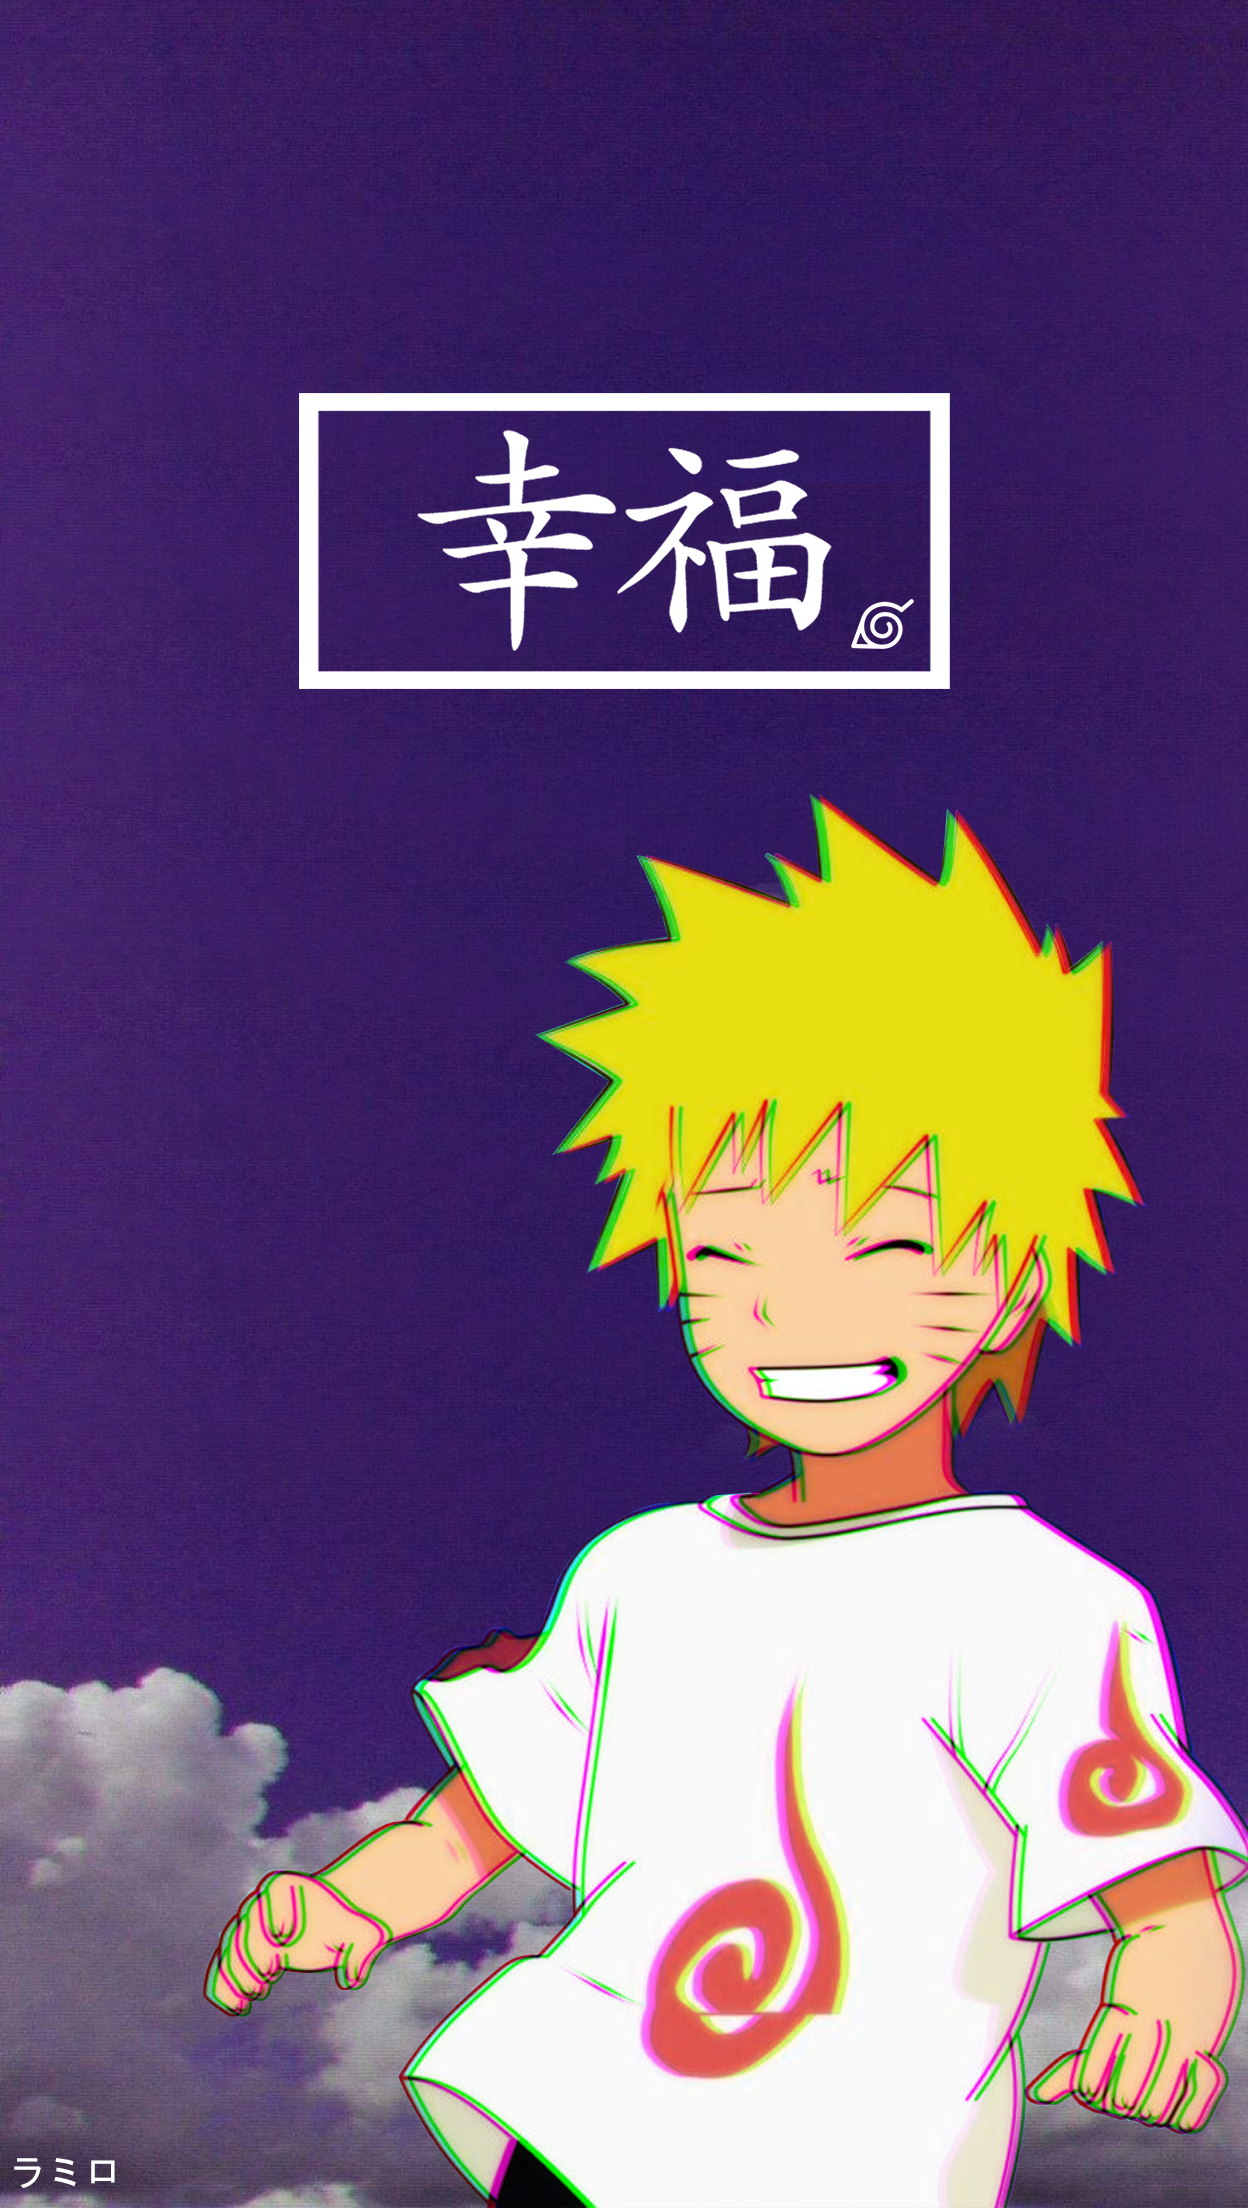 Aesthetic Anime Wallpapers Naruto - Anime Wallpaper HD